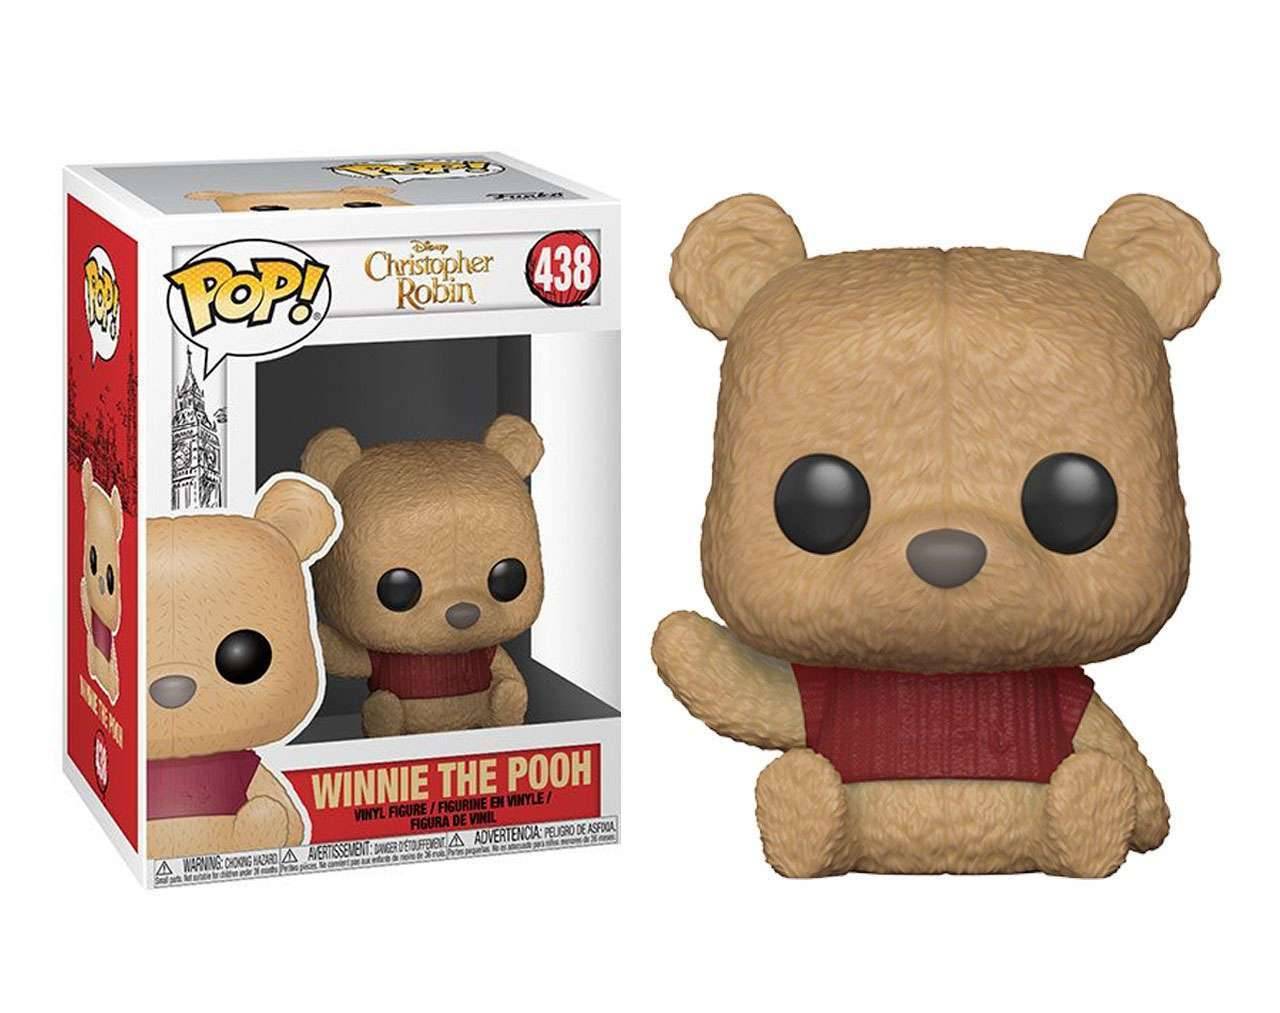 Winnie the Pooh (Christopher Robin) Pop! Vinyl